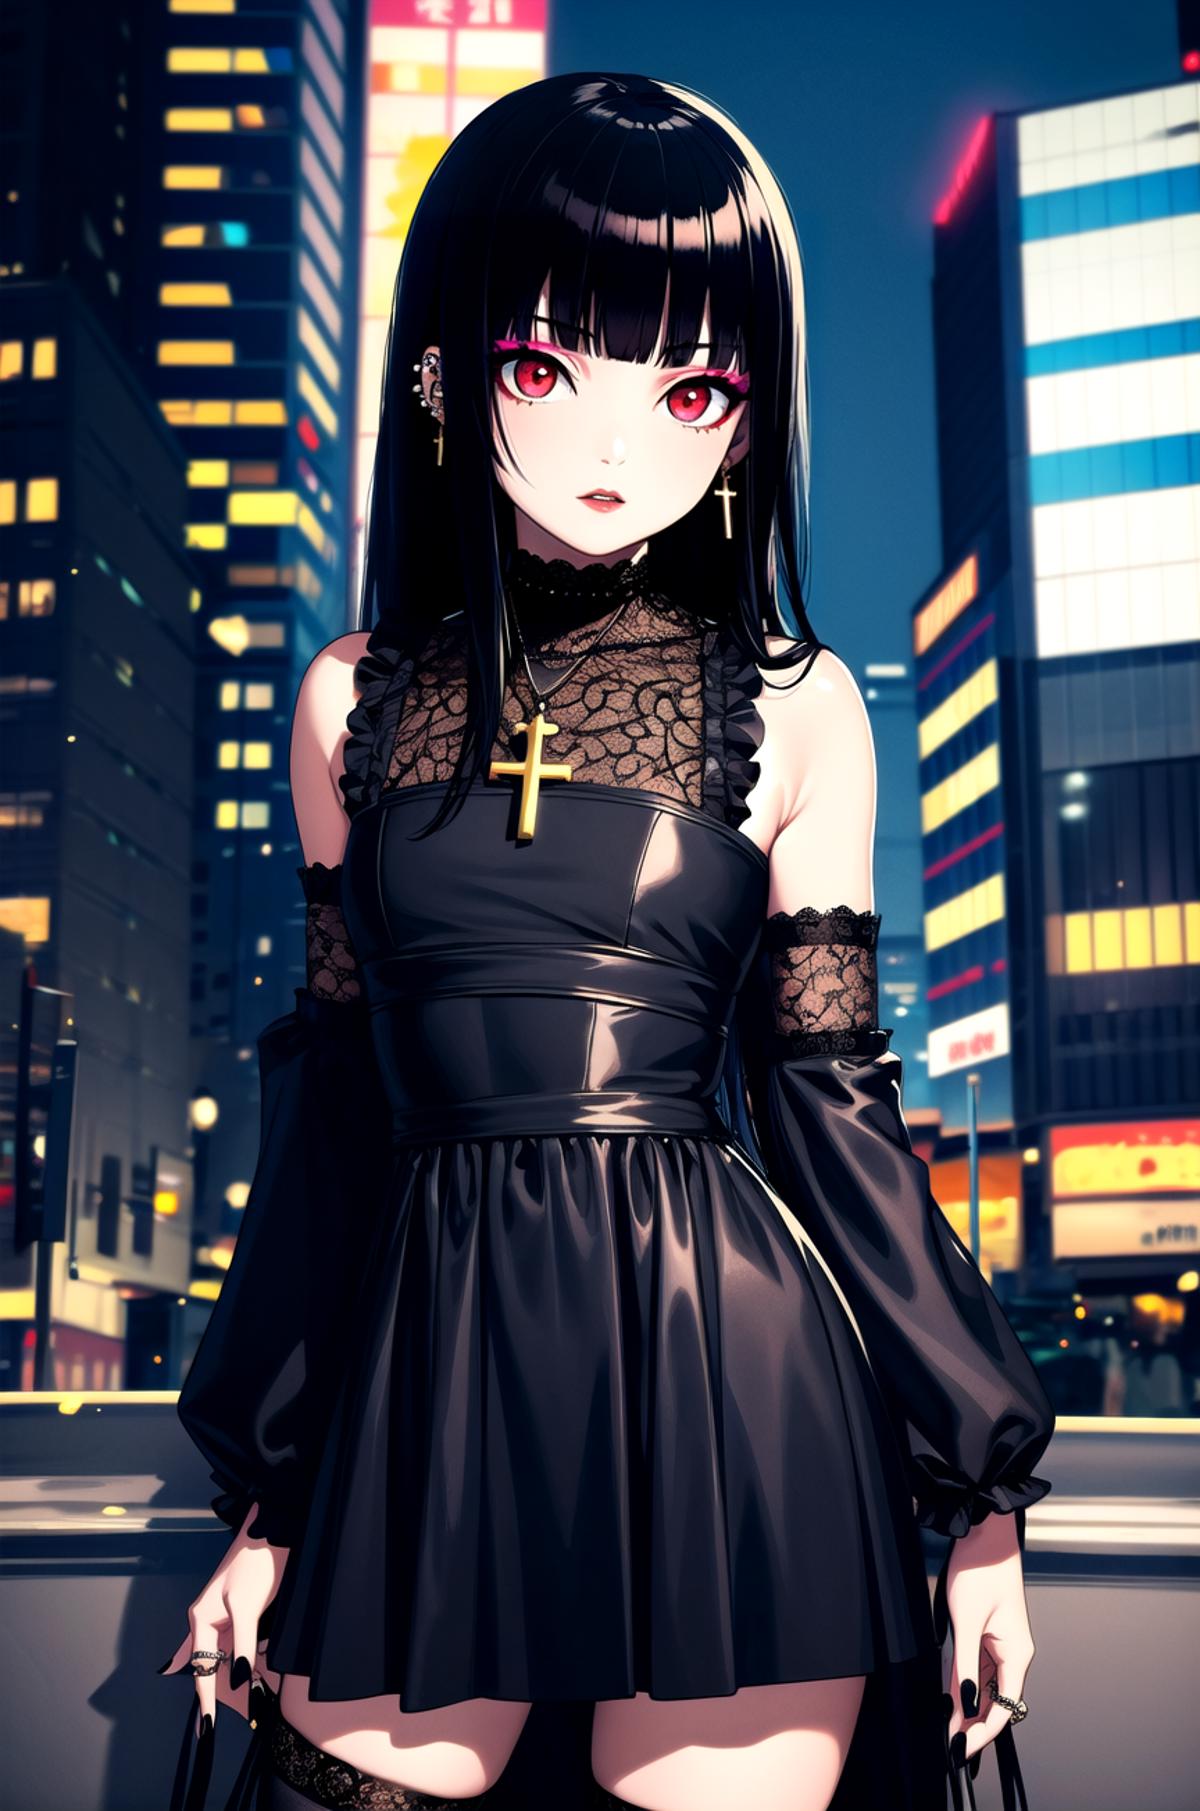 Enma Ai/阎魔爱  《Hell Girl》/《JigokuShoujo》/《地狱少女》  - Character Style image by Deto15